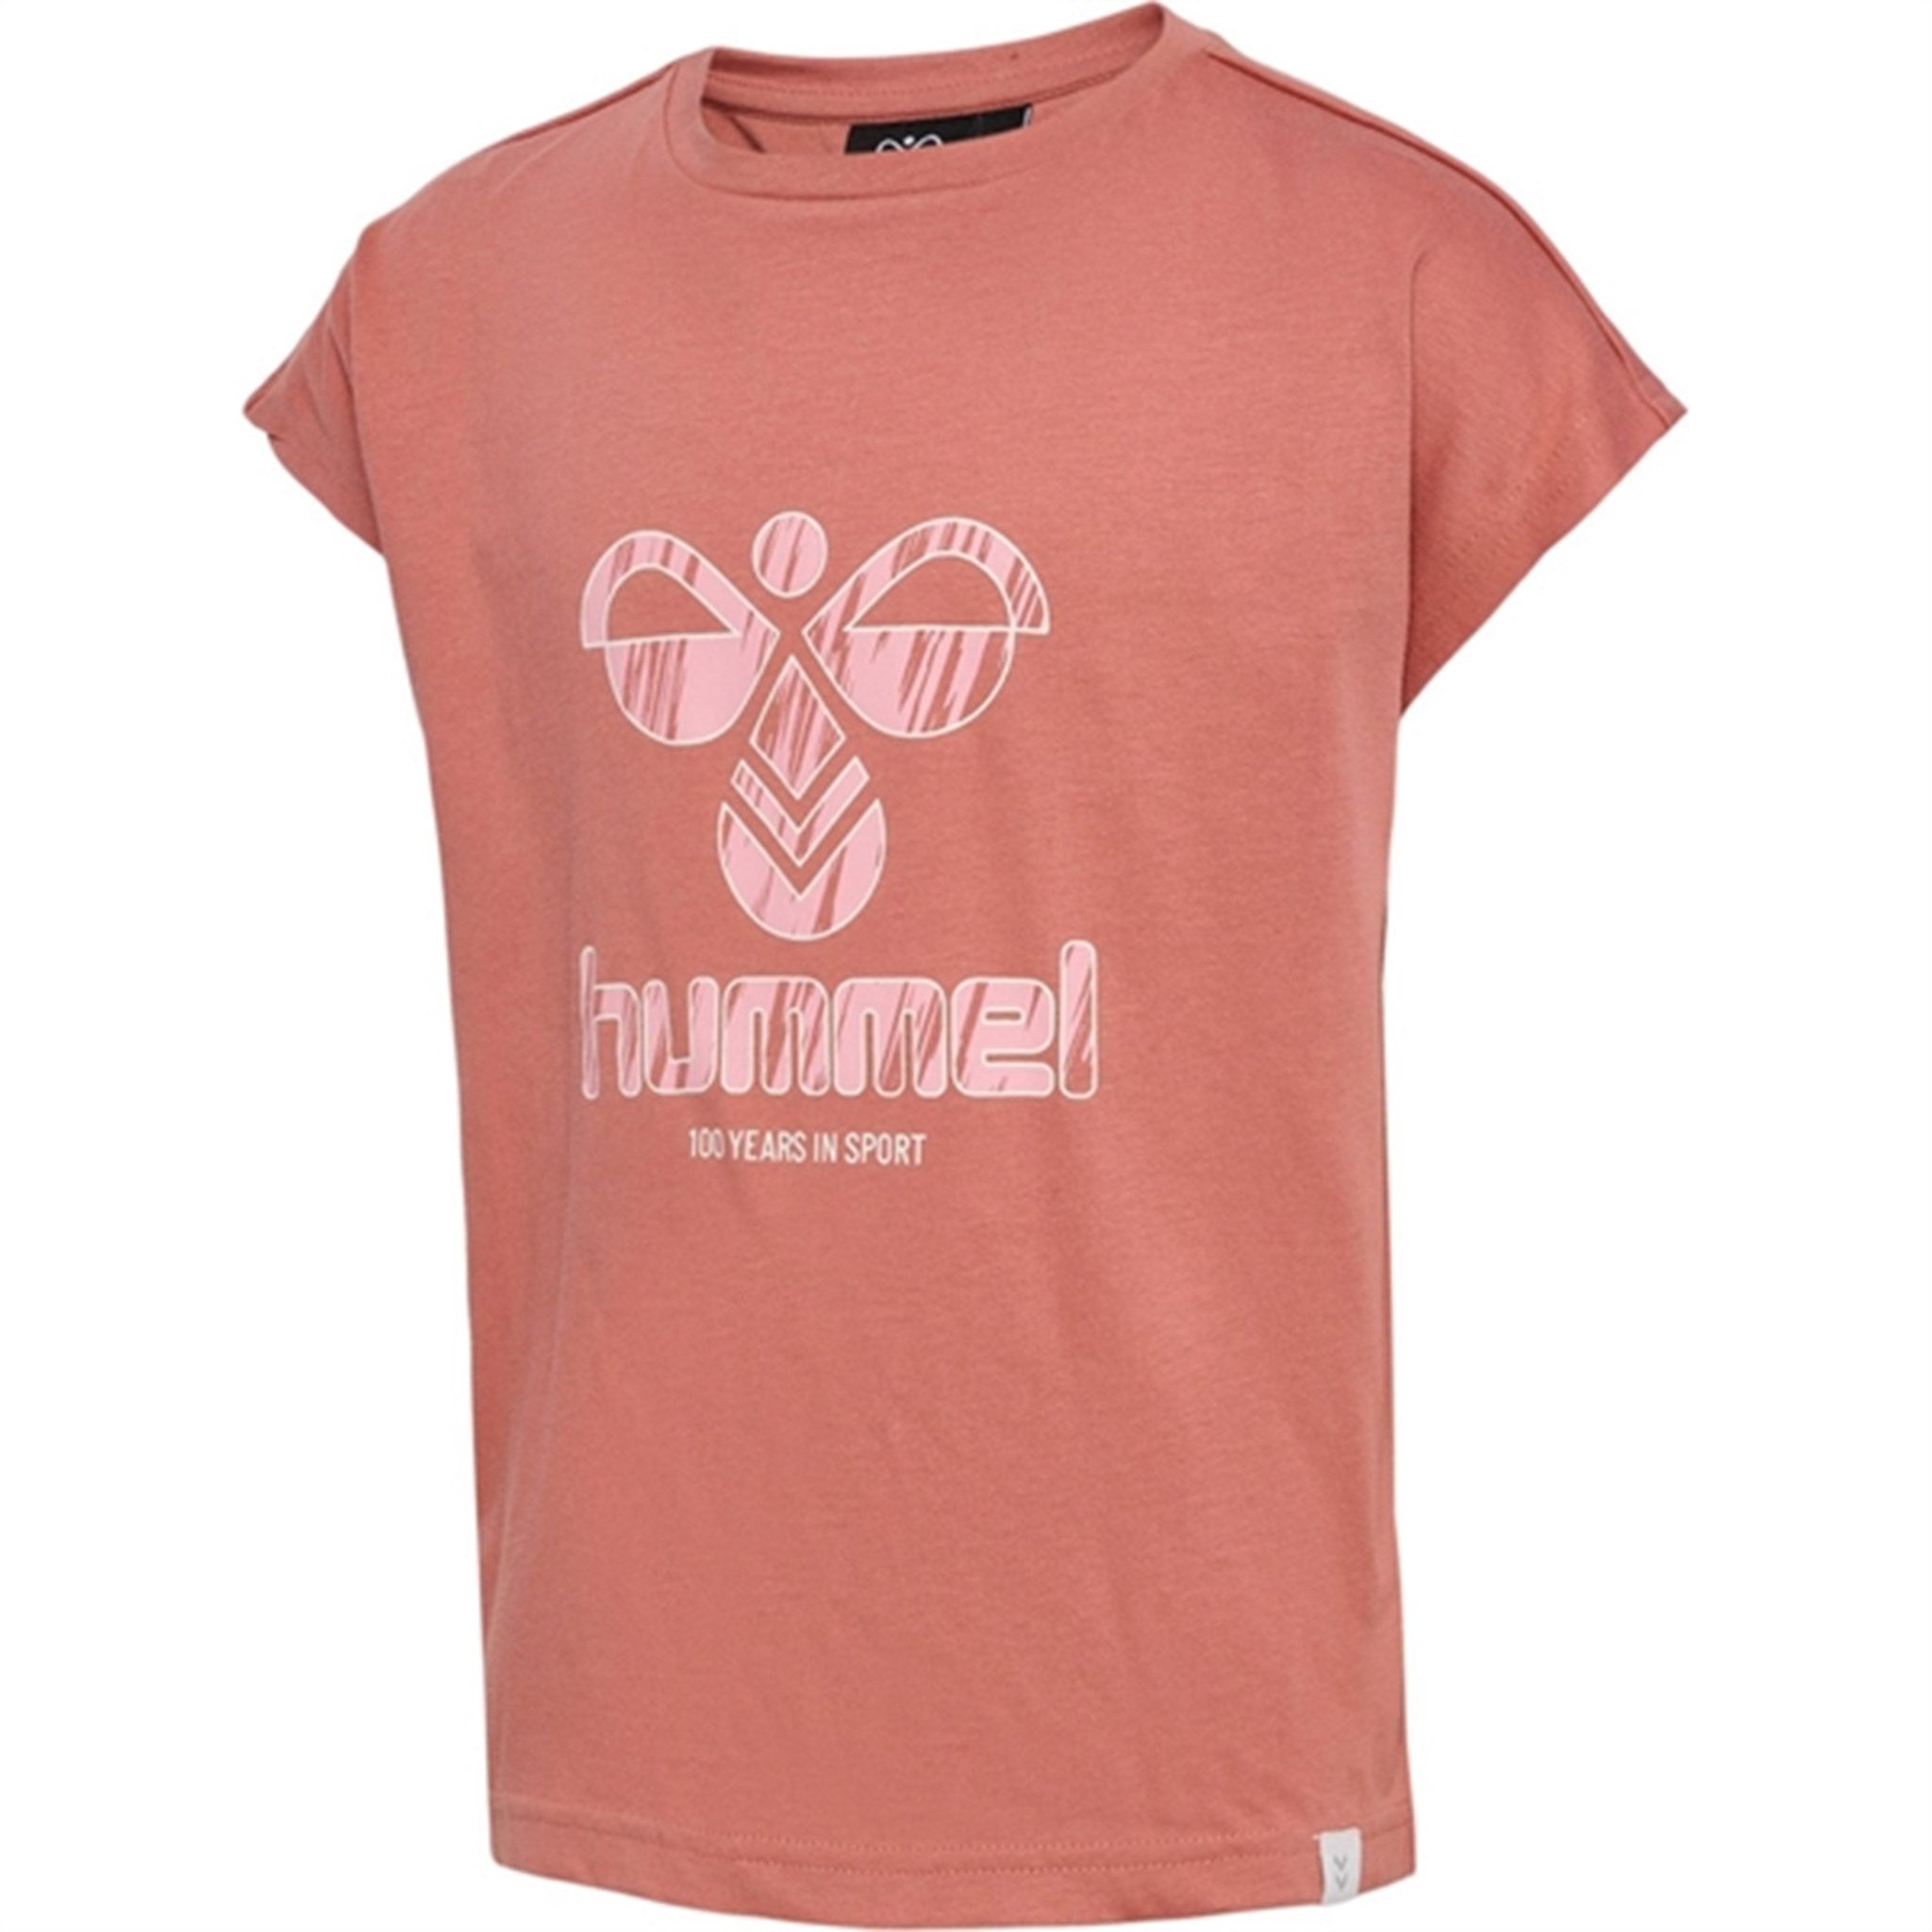 Hummel Canyon Rose Olivia T-shirt S/S 3